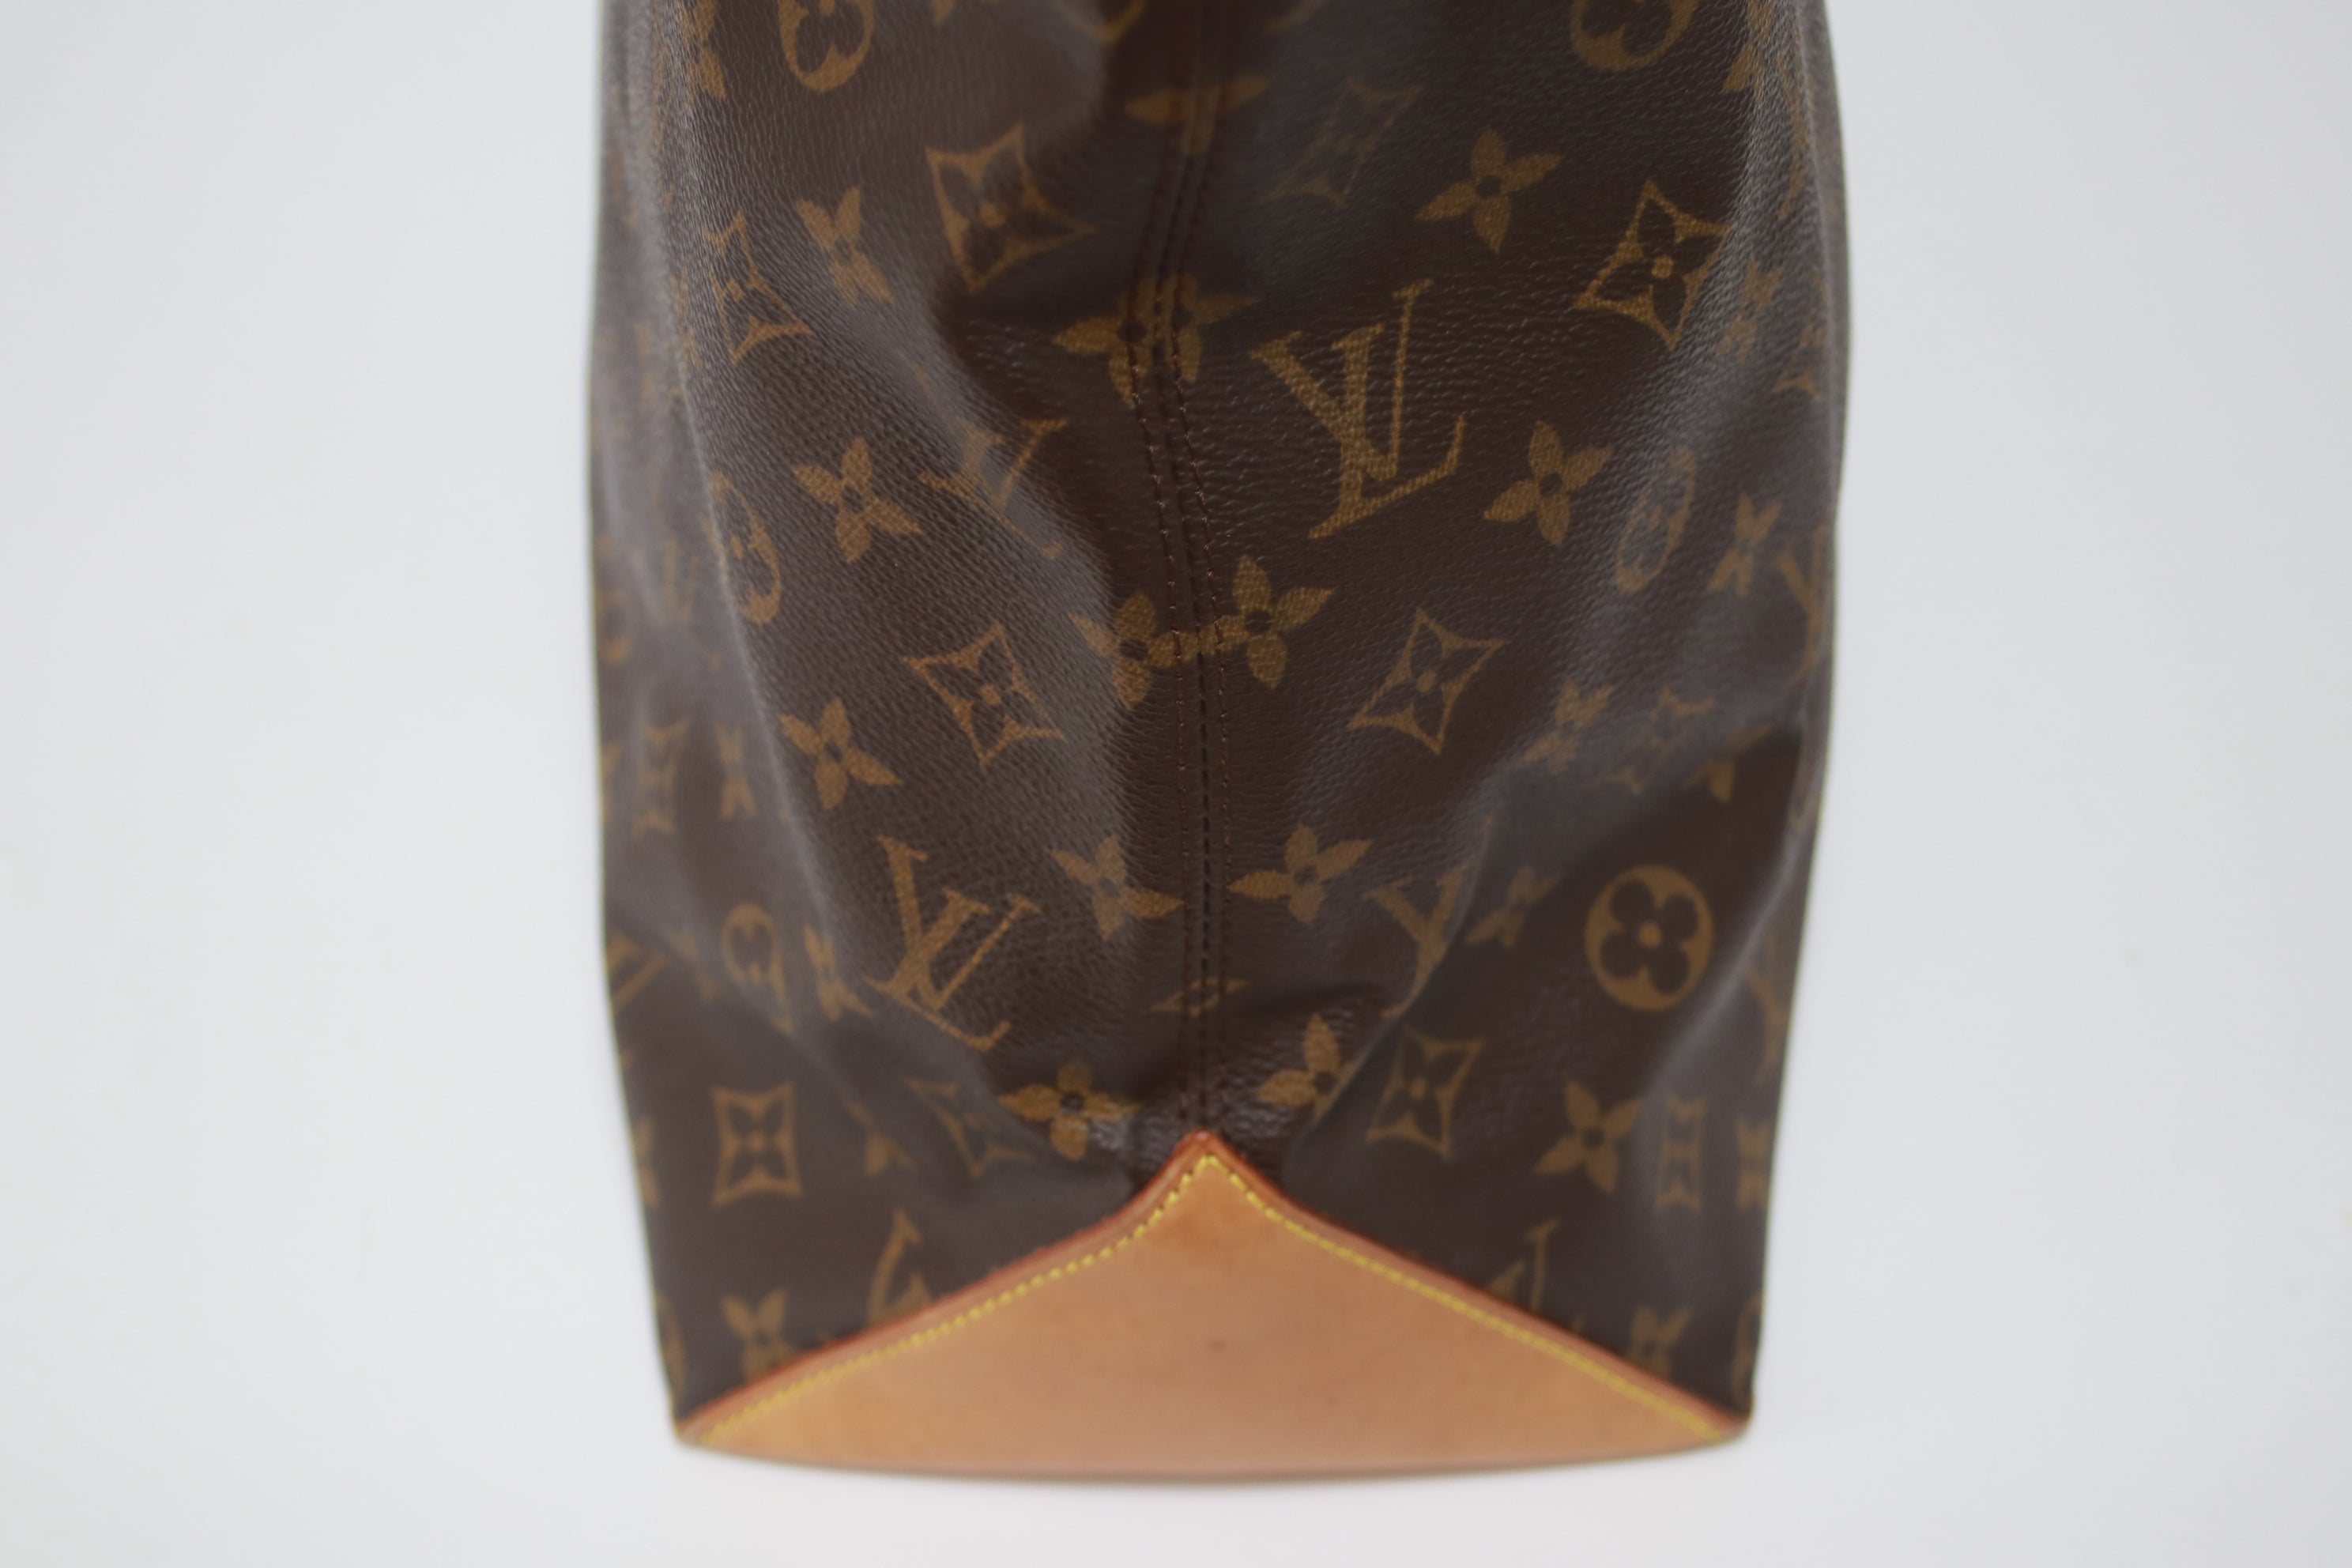 Vintage Louis Vuitton Keepall Bandouliere 60 Boston Travel Bag